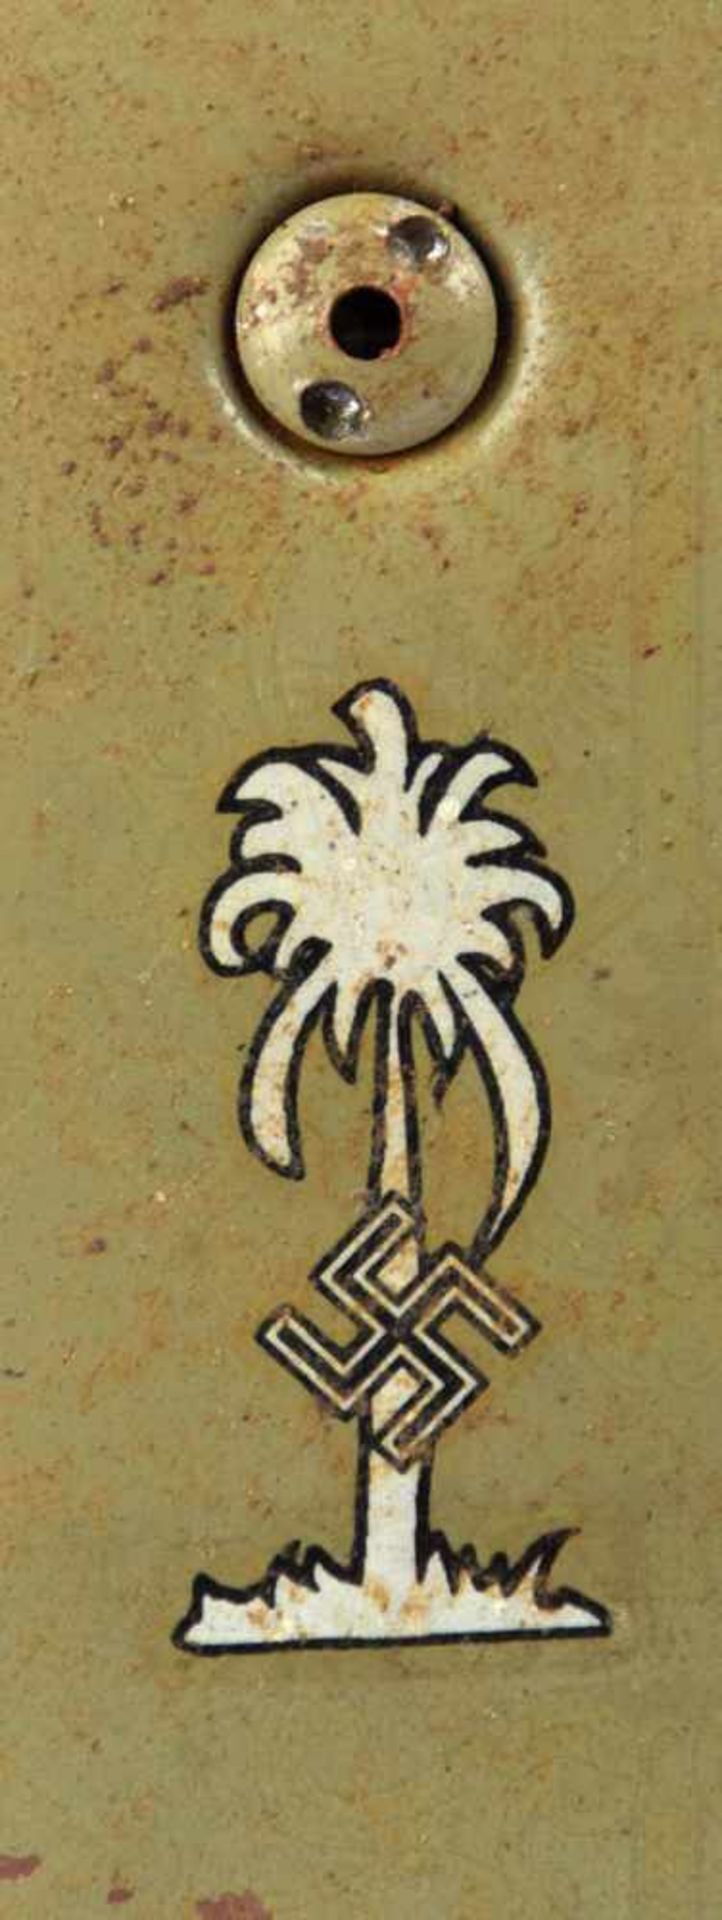 FALLSCHIRMSCHÜTZEN-STAHLHELM 2. MODELL, Sammleranfertigung, Glocke sandfarben lackiert, Afrikakorps- - Bild 3 aus 5